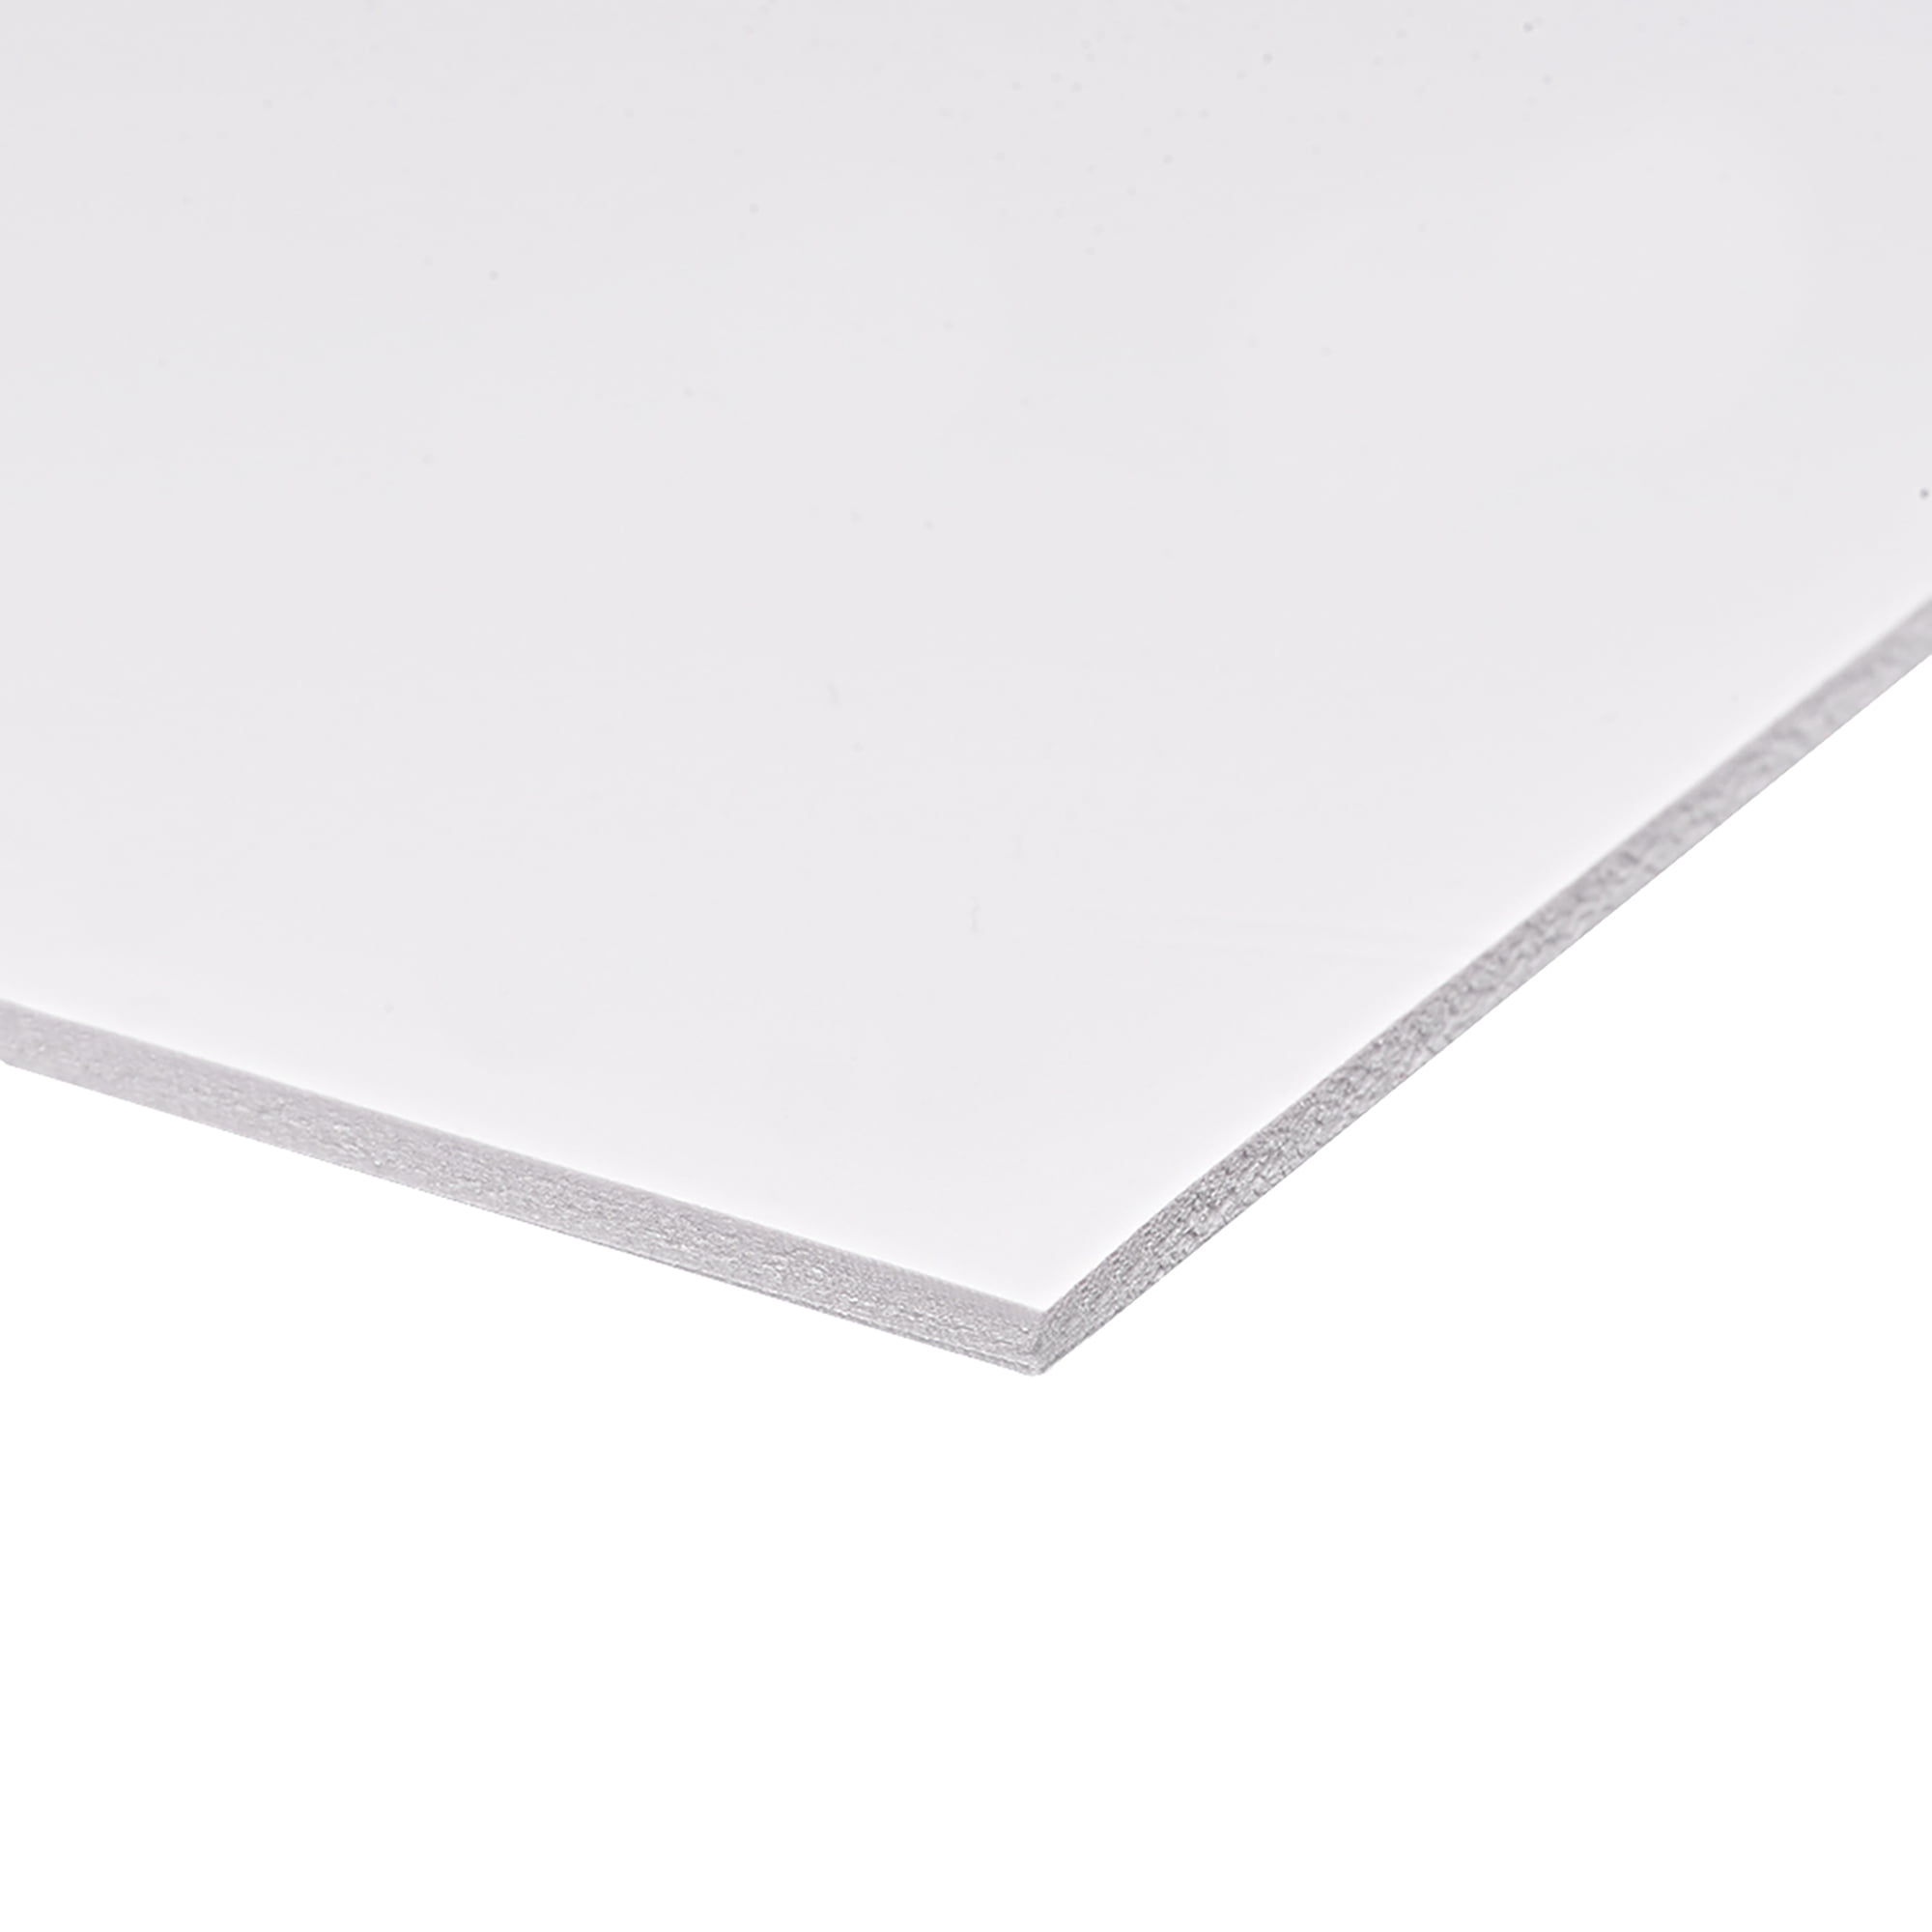 2pcs PVC Foam Board Plastic Expansion Sheets Craft Model 200x300-300x400mm 2-9mm 